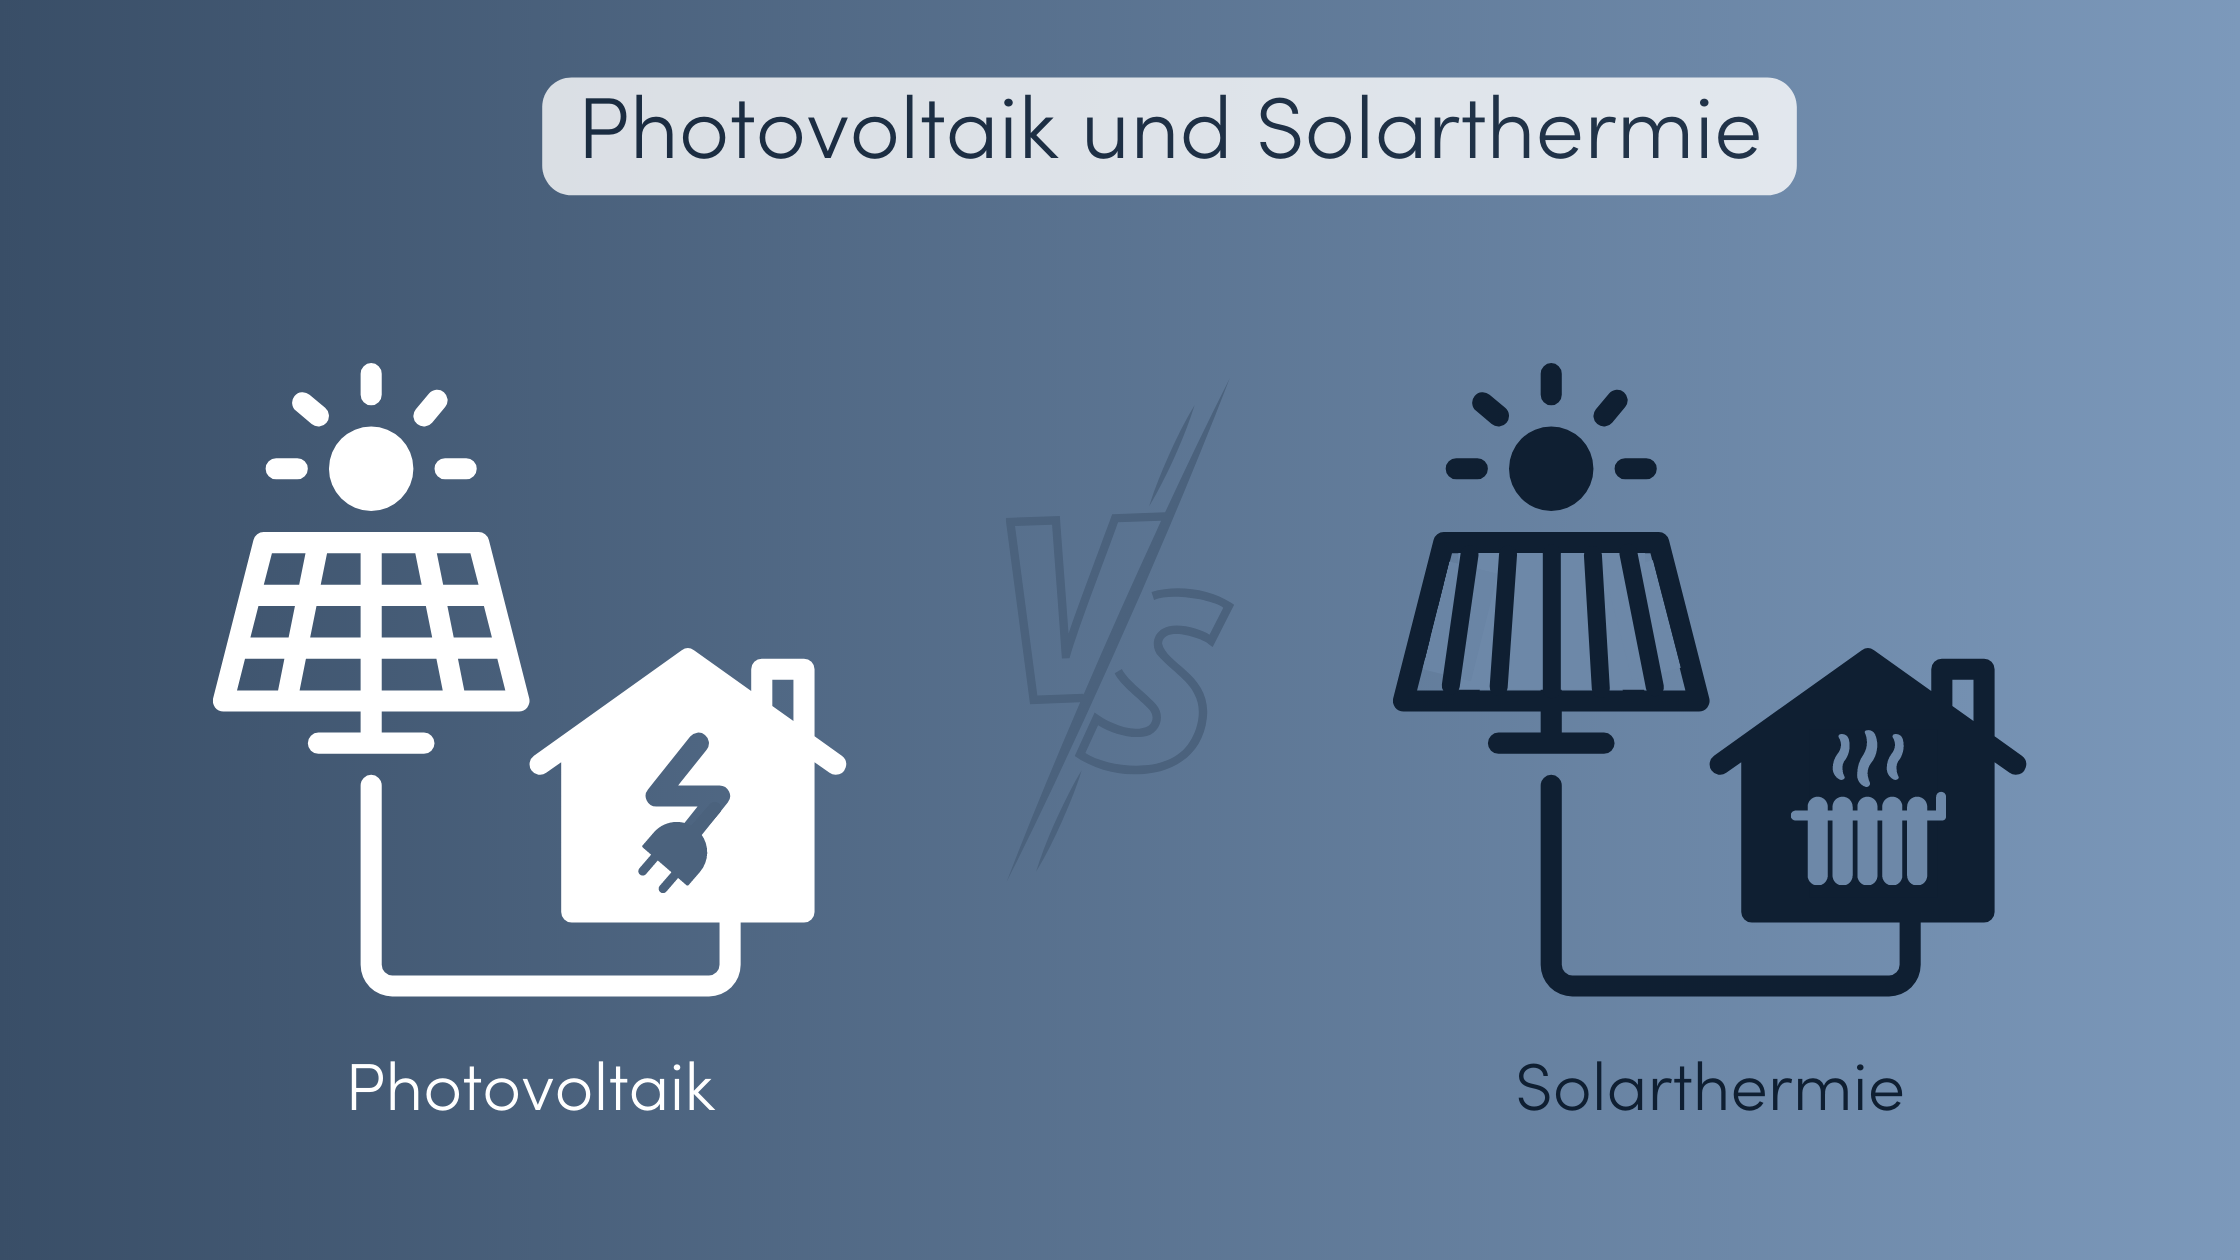 PV vs solarthermie